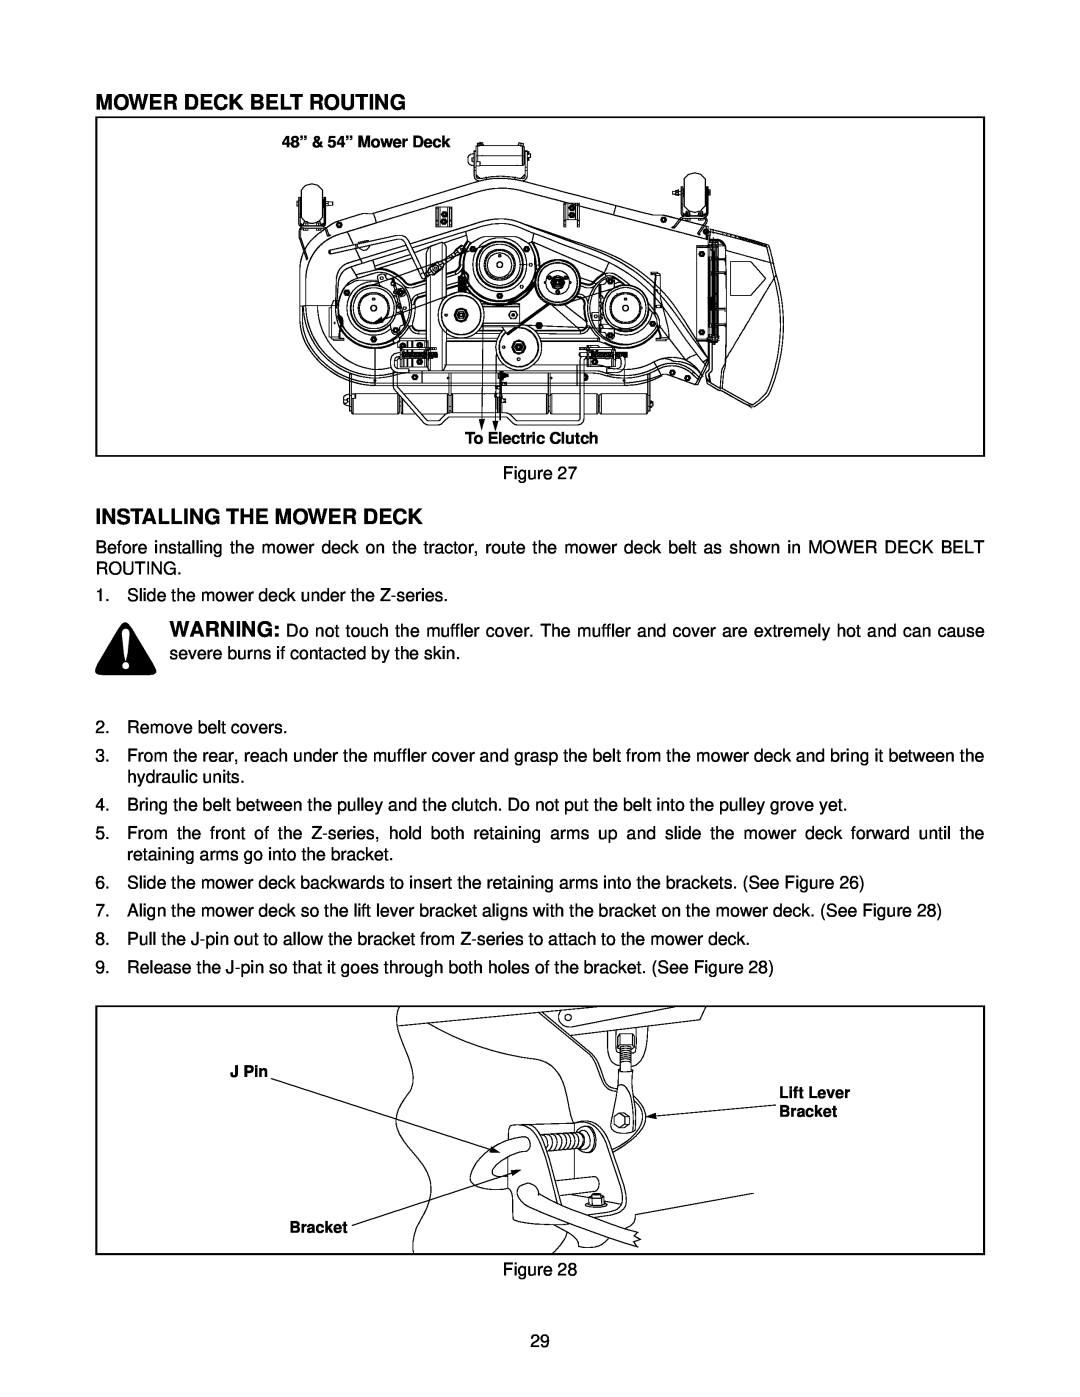 White Outdoor Z-185L, Z-205, Z-225 manual Mower Deck Belt Routing, Installing The Mower Deck 